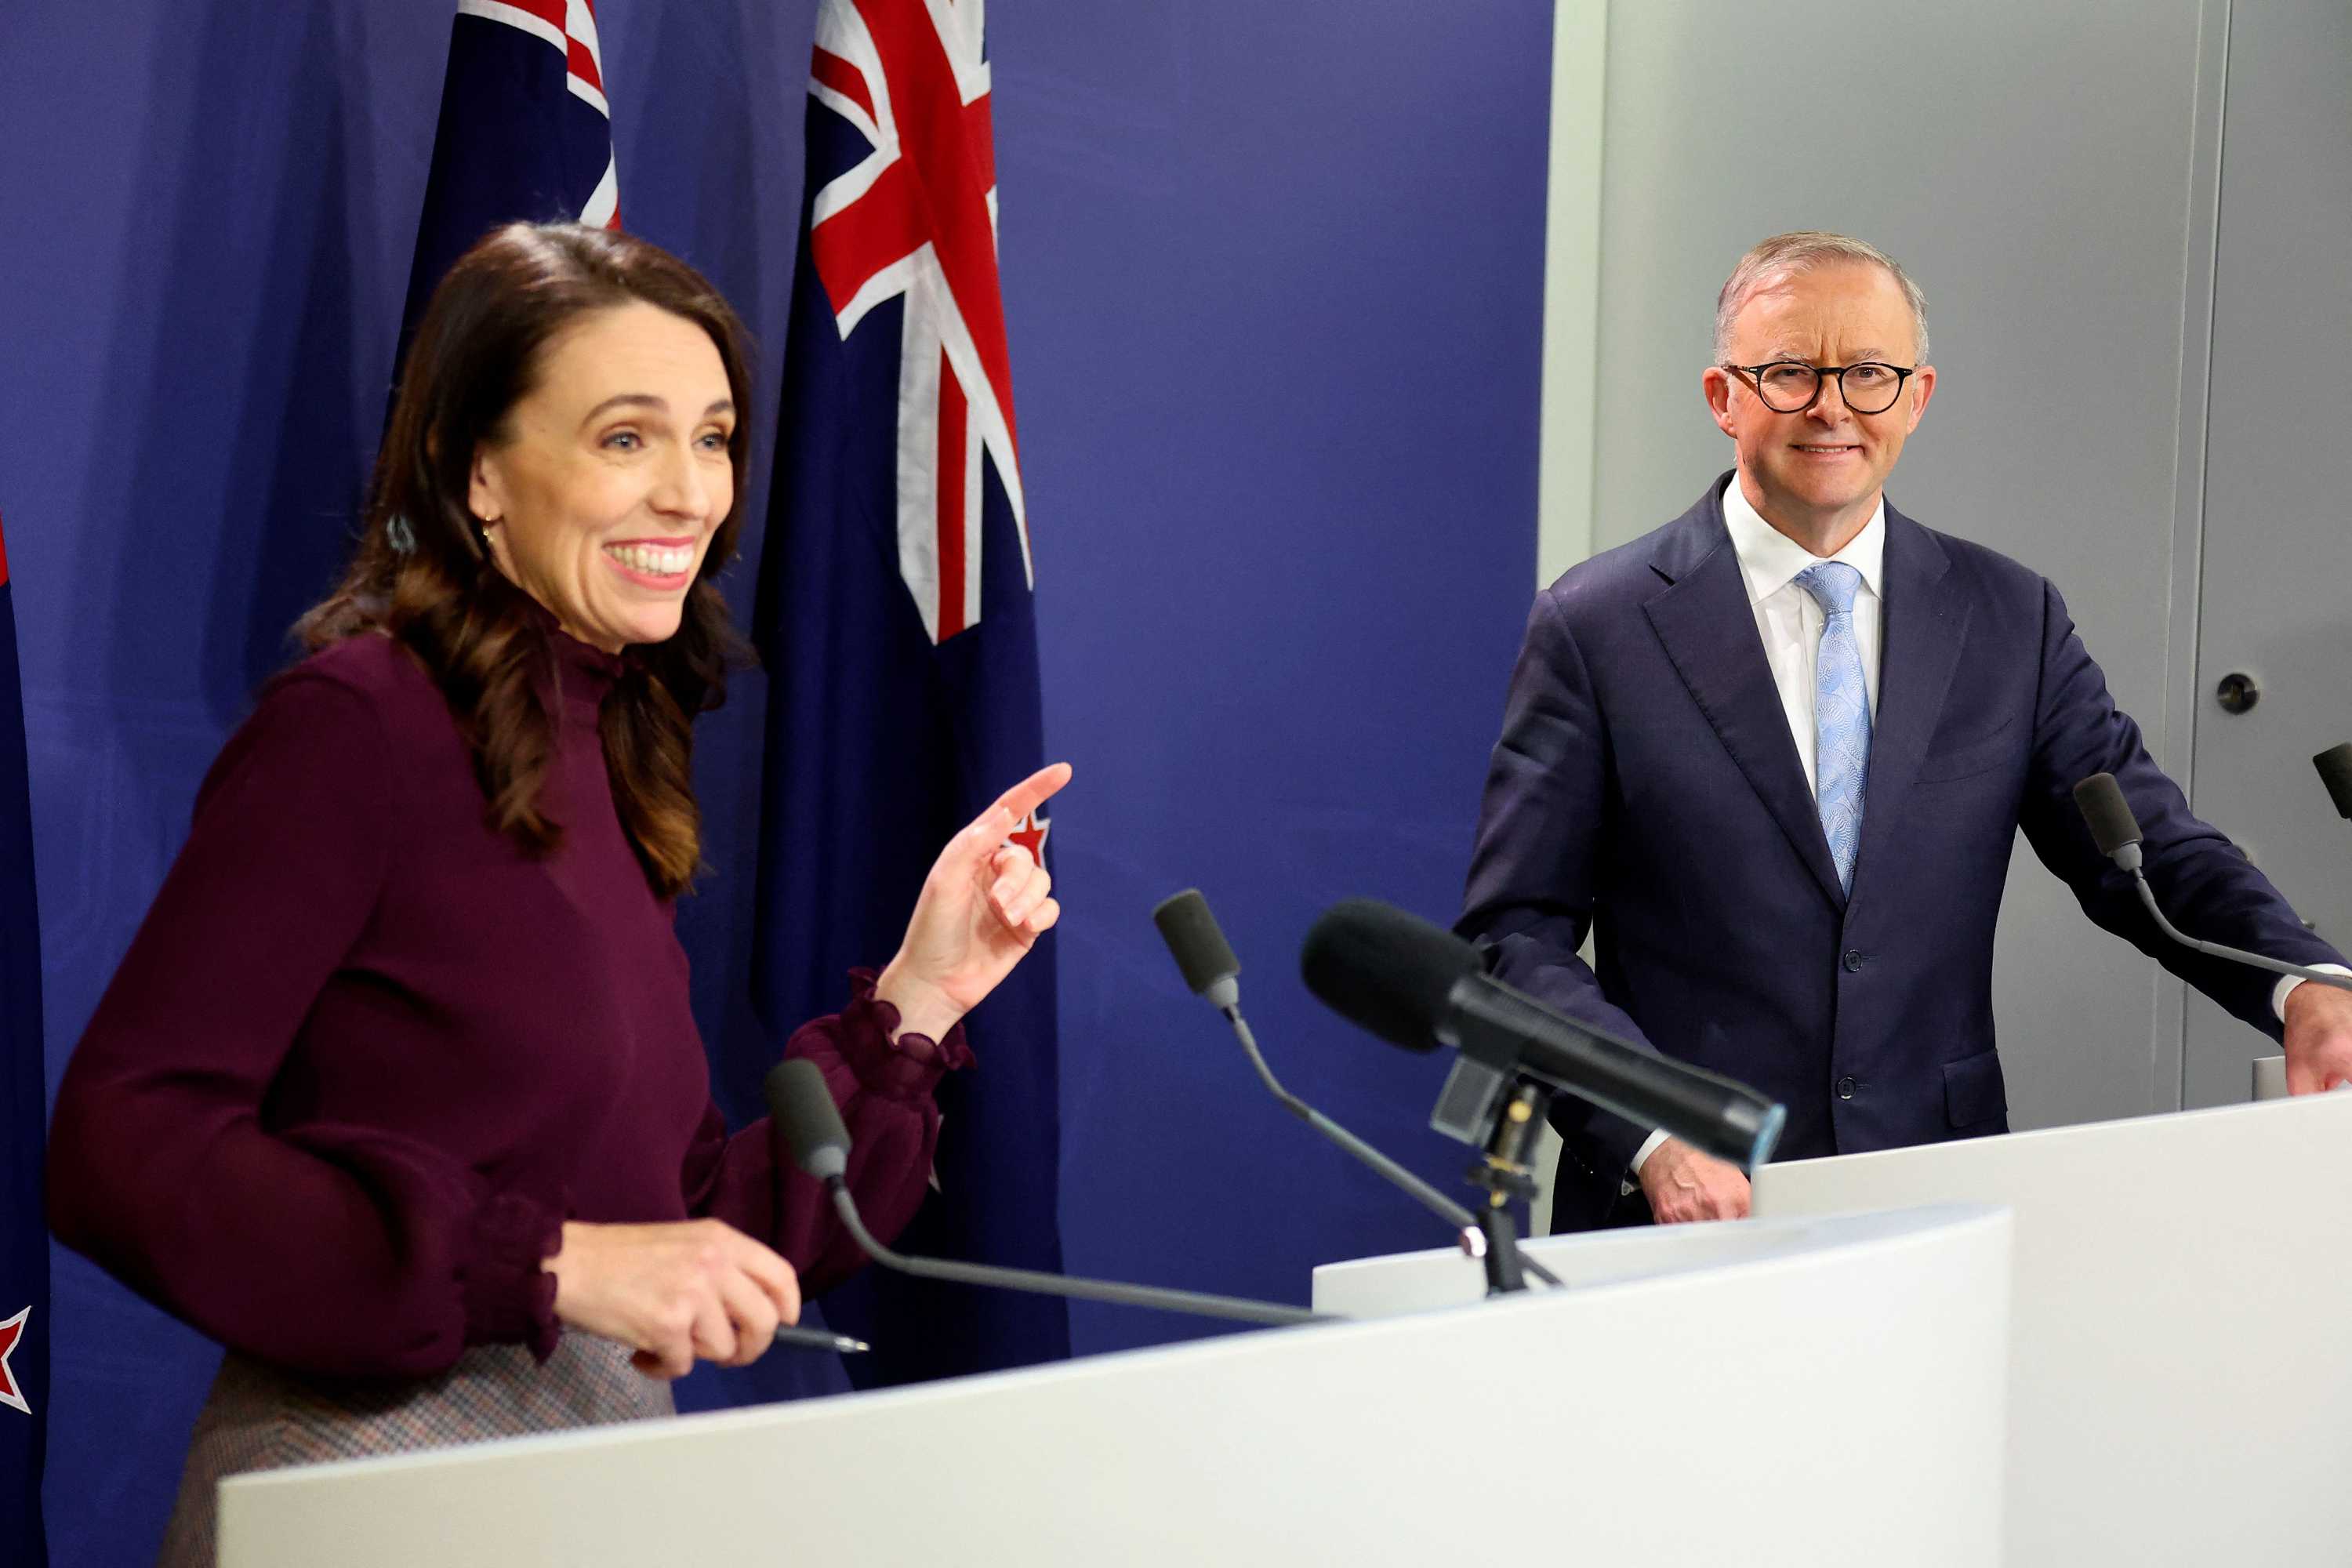 Not Quite Australian - What’s Australia’s problem with New Zealanders?